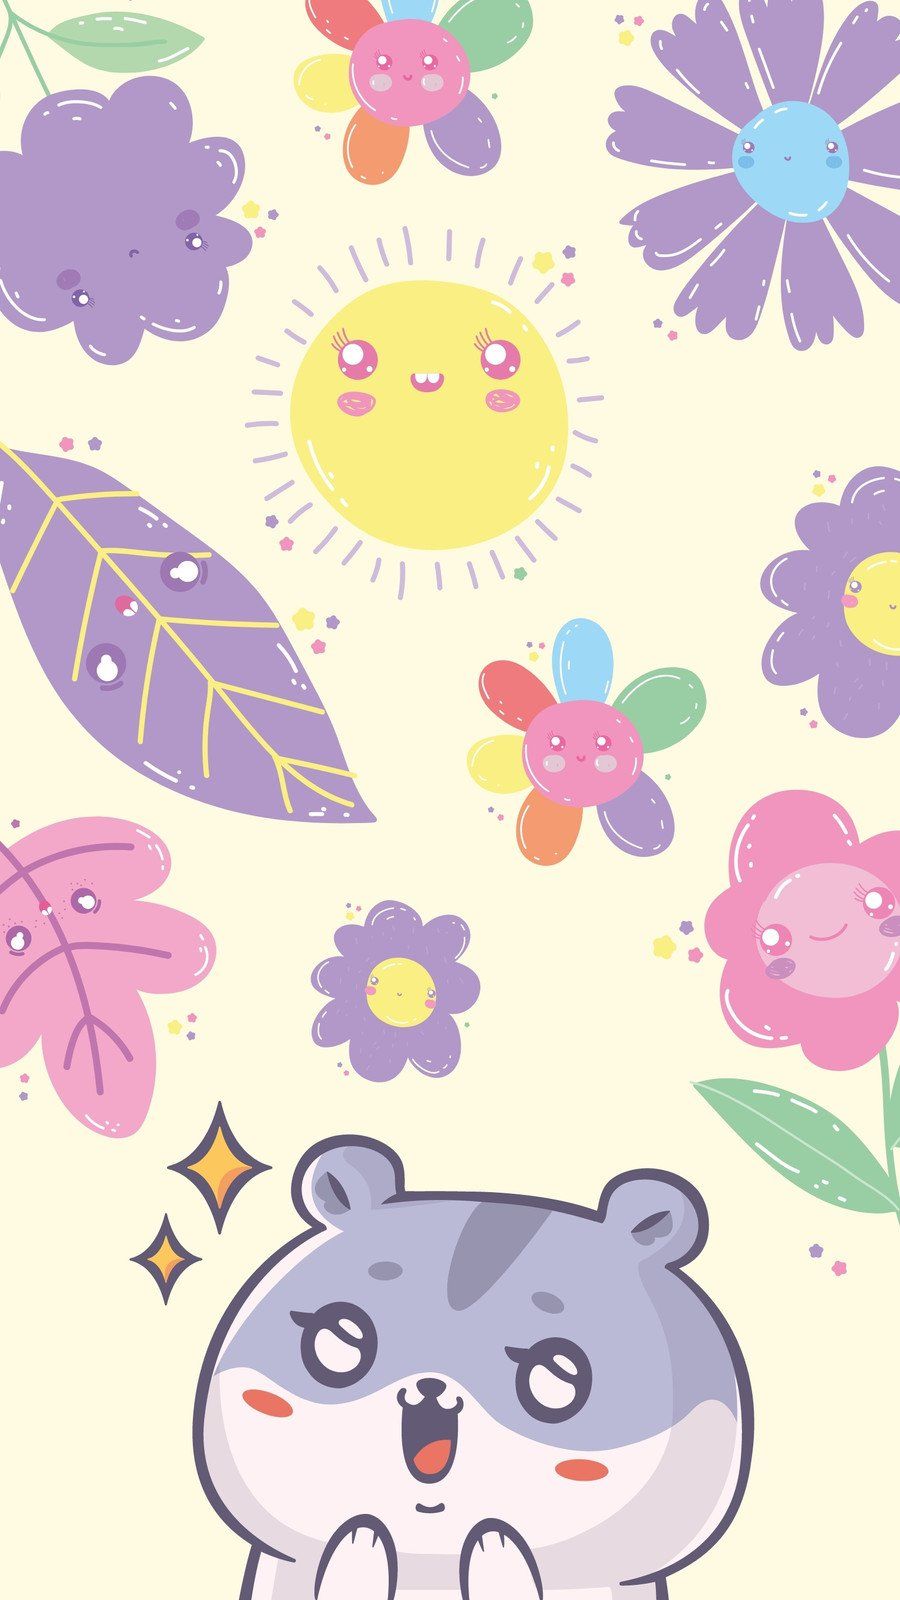 A wallpaper with a kawaii raccoon surrounded by flowers - Kawaii